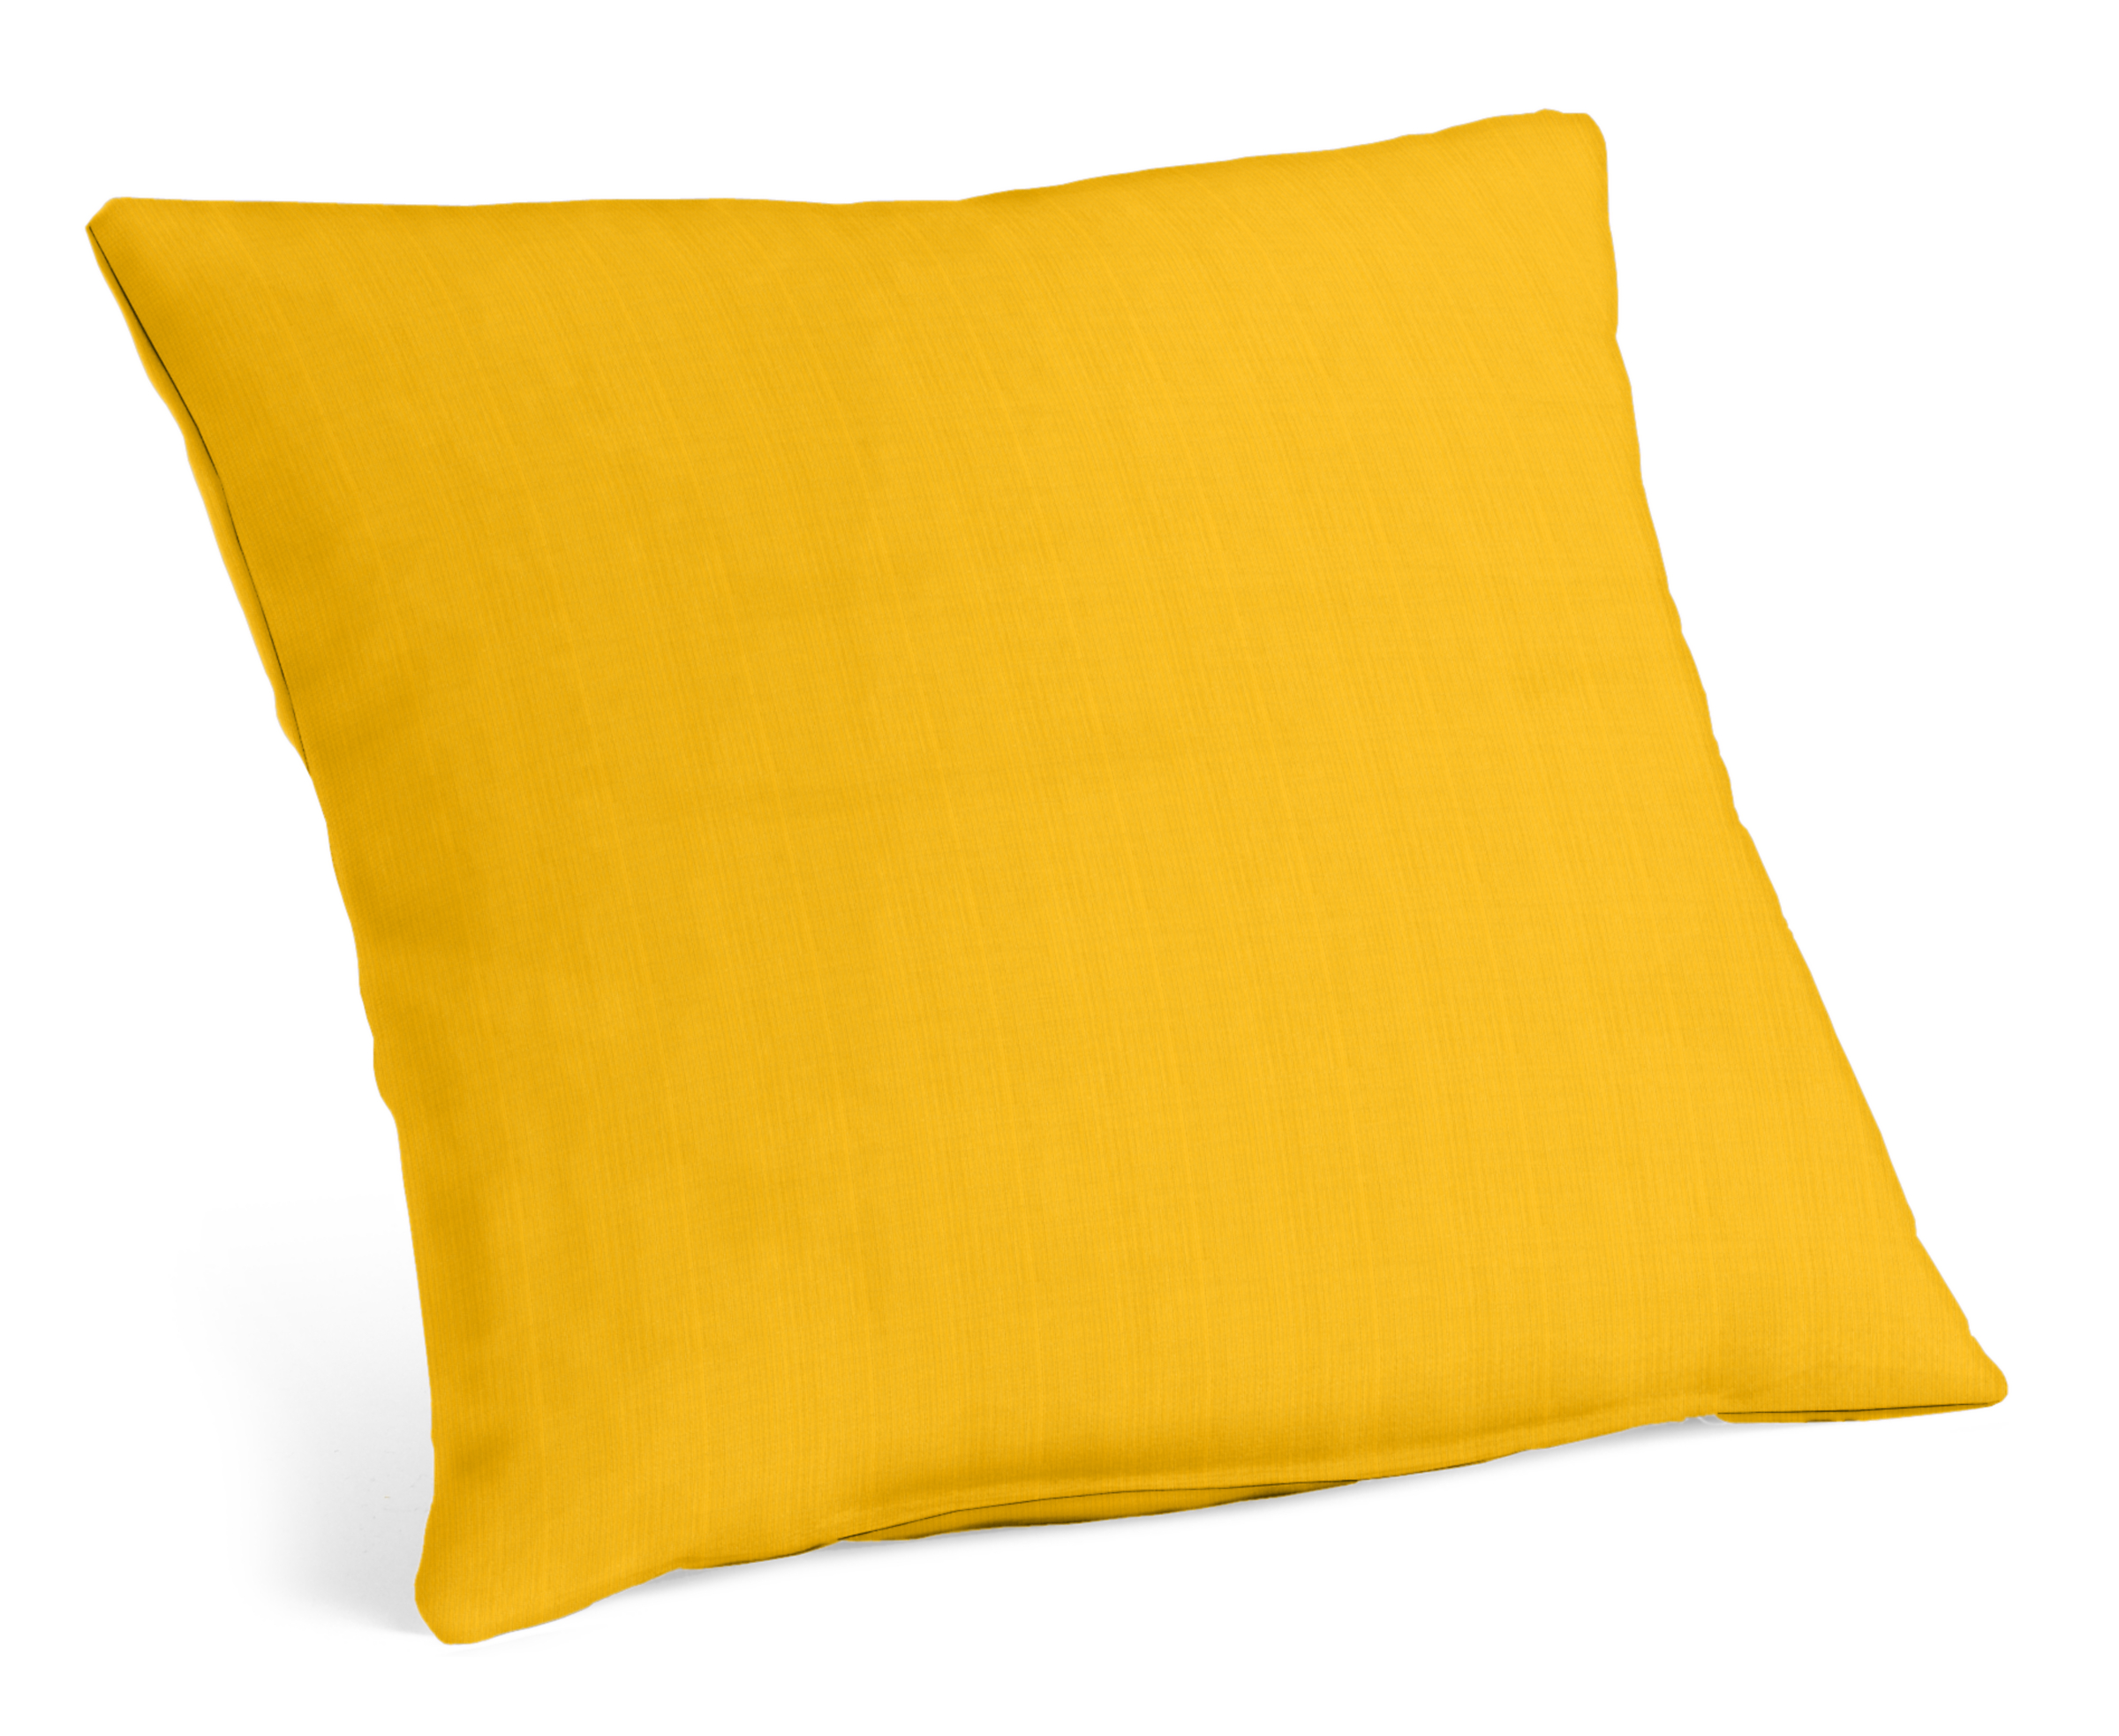 Hue 20w 20h Outdoor Pillow in Sunbrella Canvas Yellow